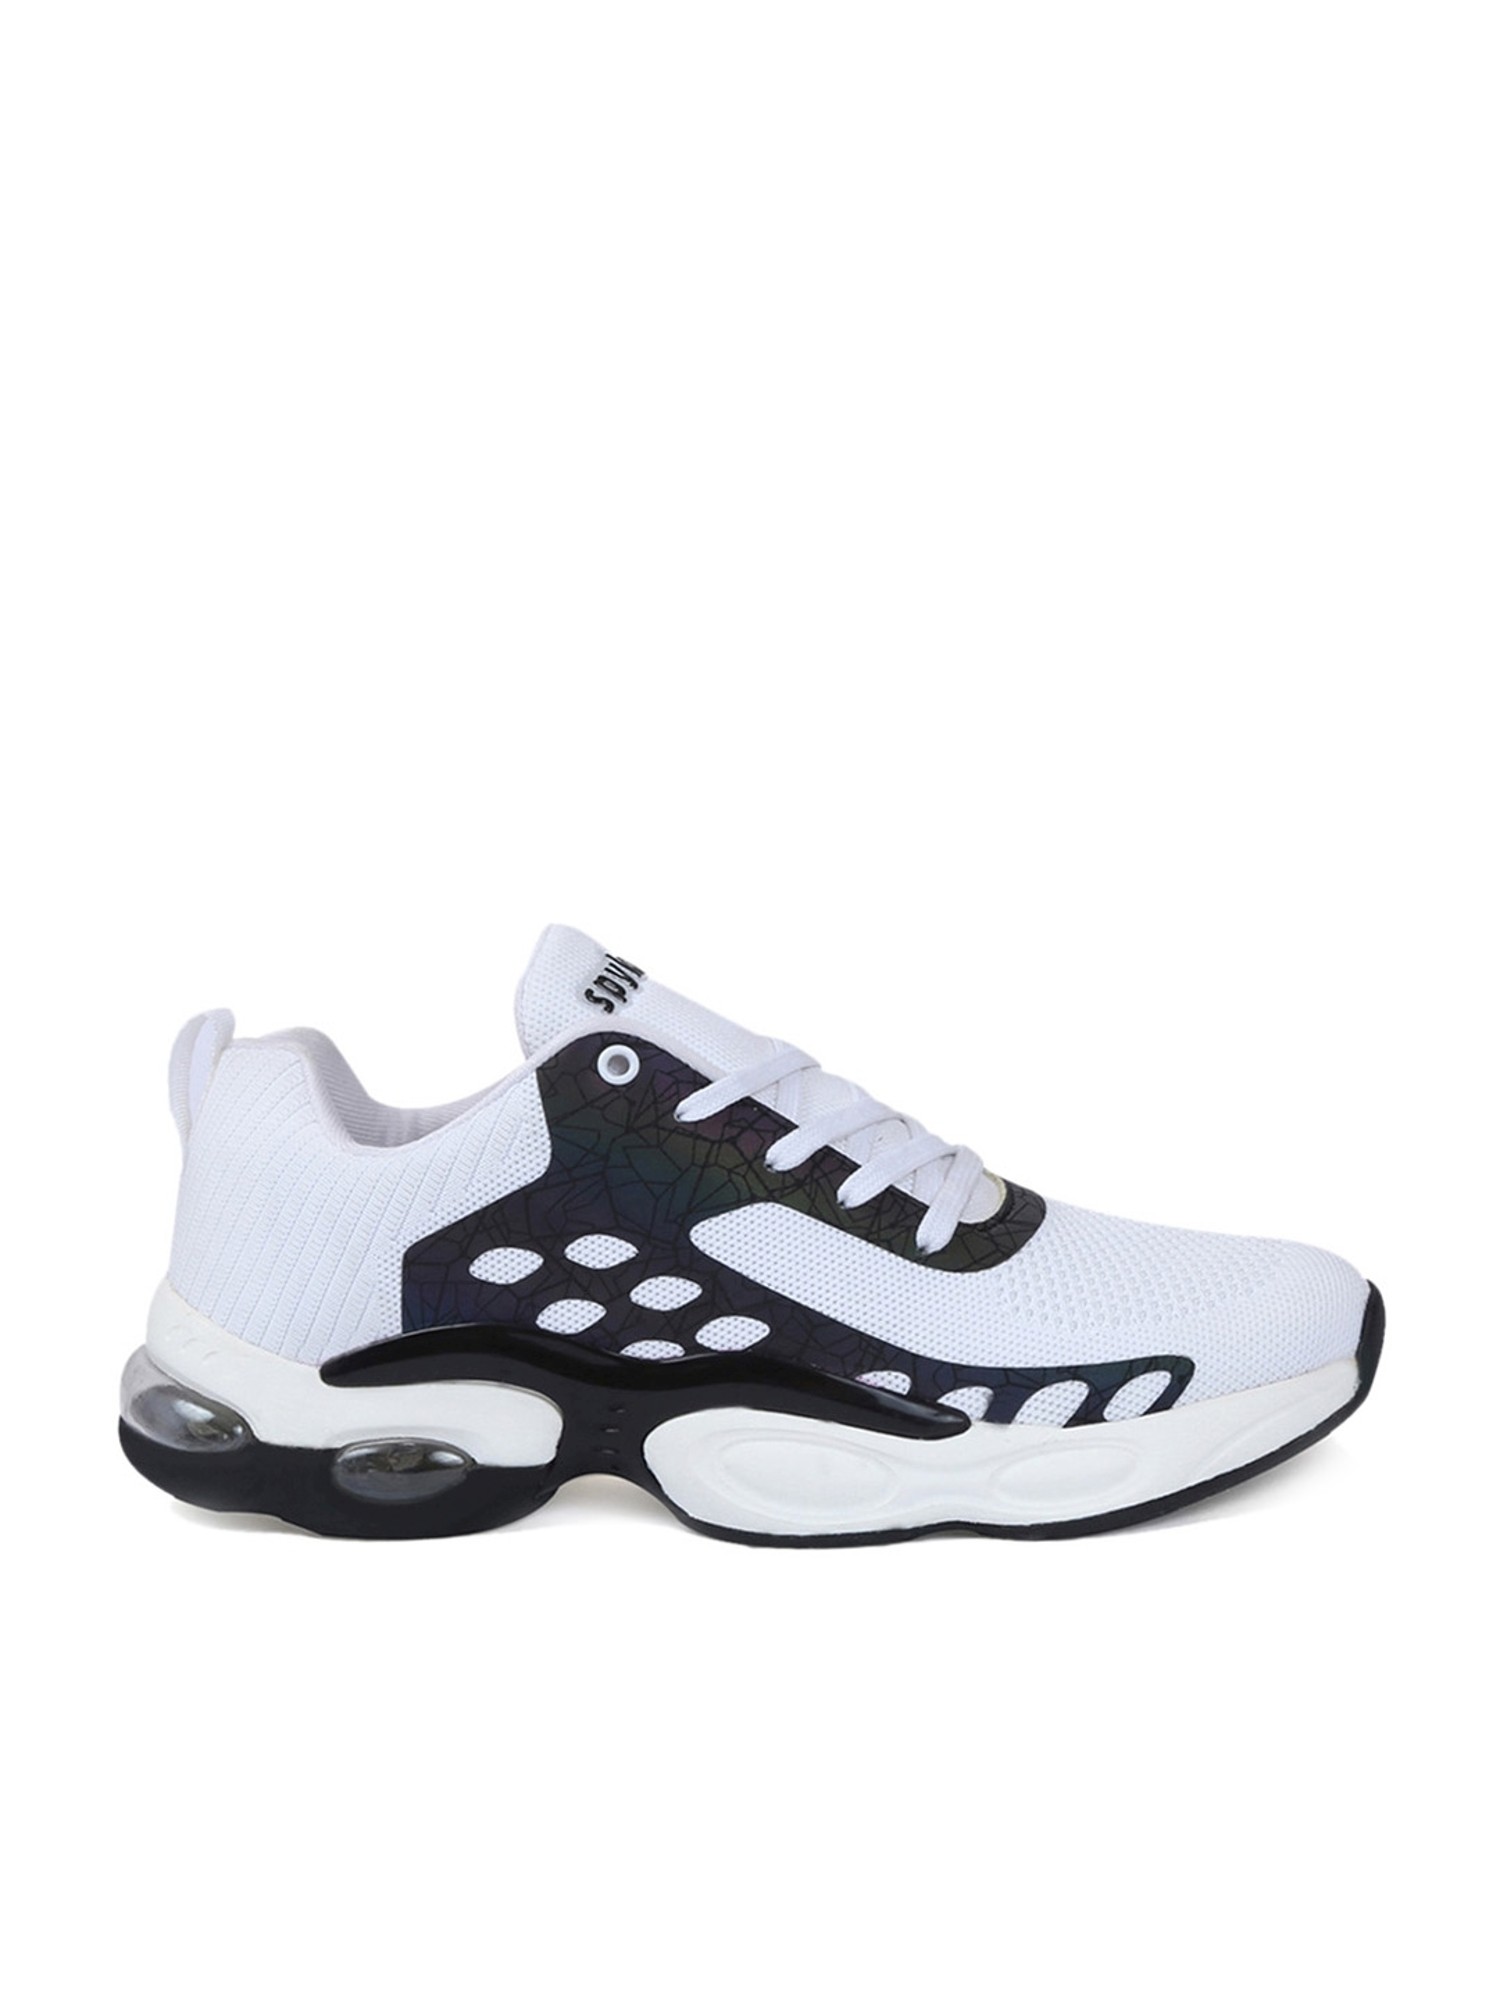 MYTHOS MDS 2 Running shoe  Men  Diadora Online Store IN